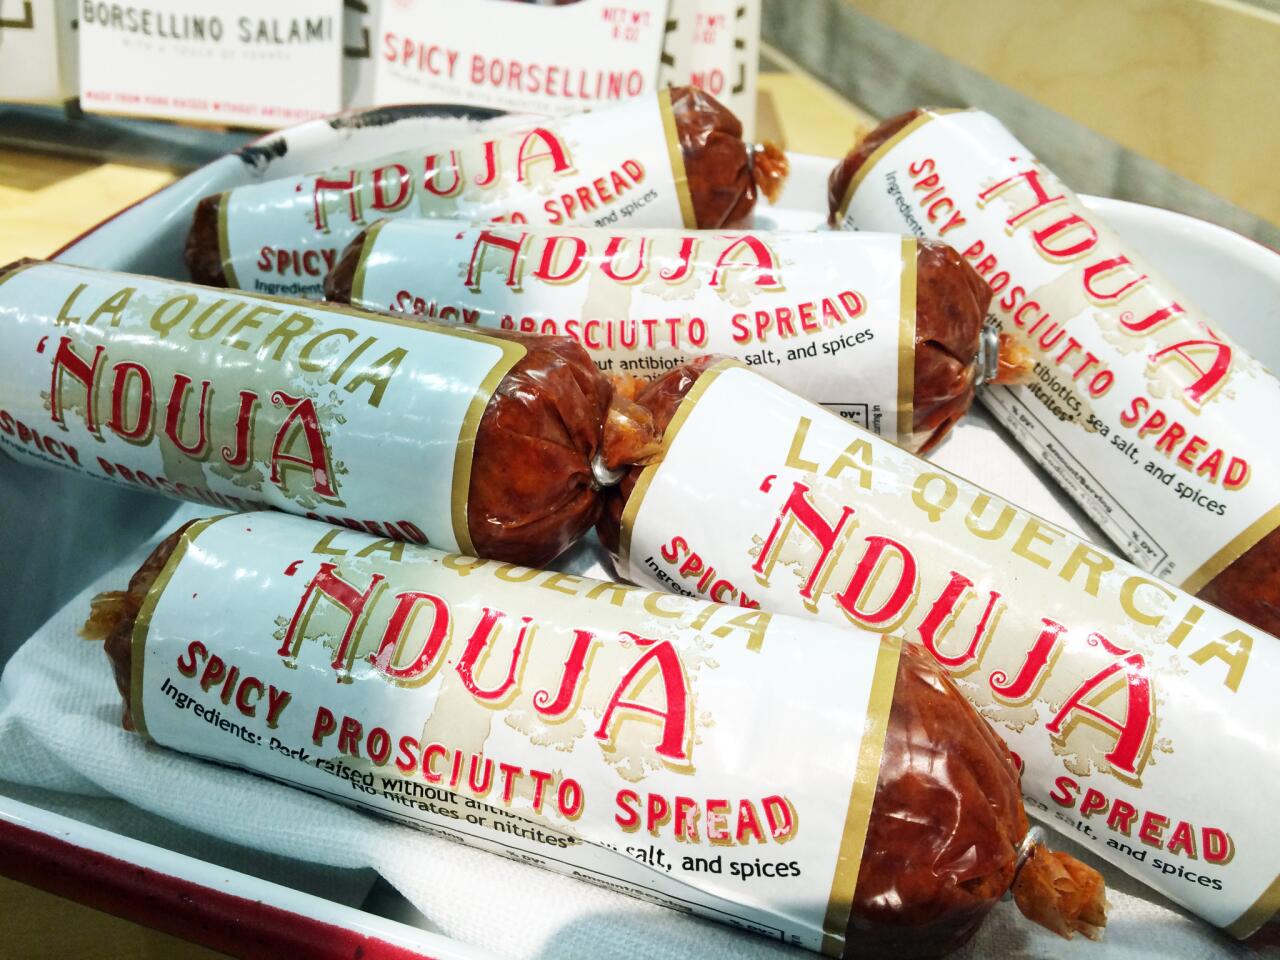 Nduja Americana: A spicy prosciutto spread made by La Quercia cured meats.